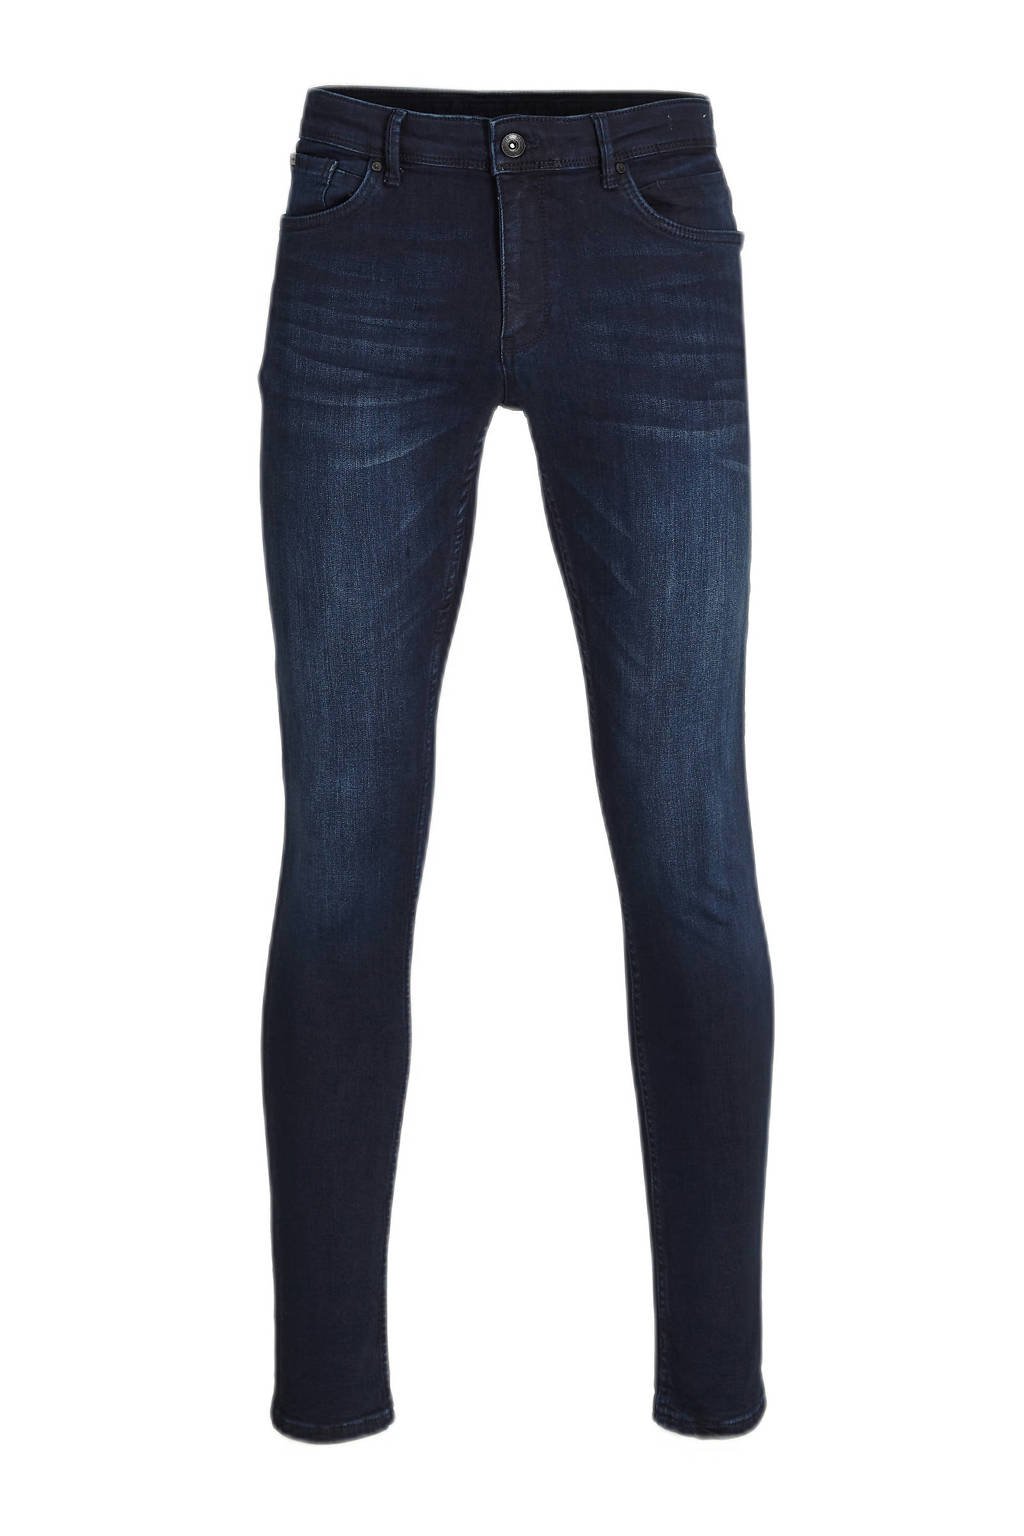 Purewhite skinny jeans The Jone W0714 denim dark blue